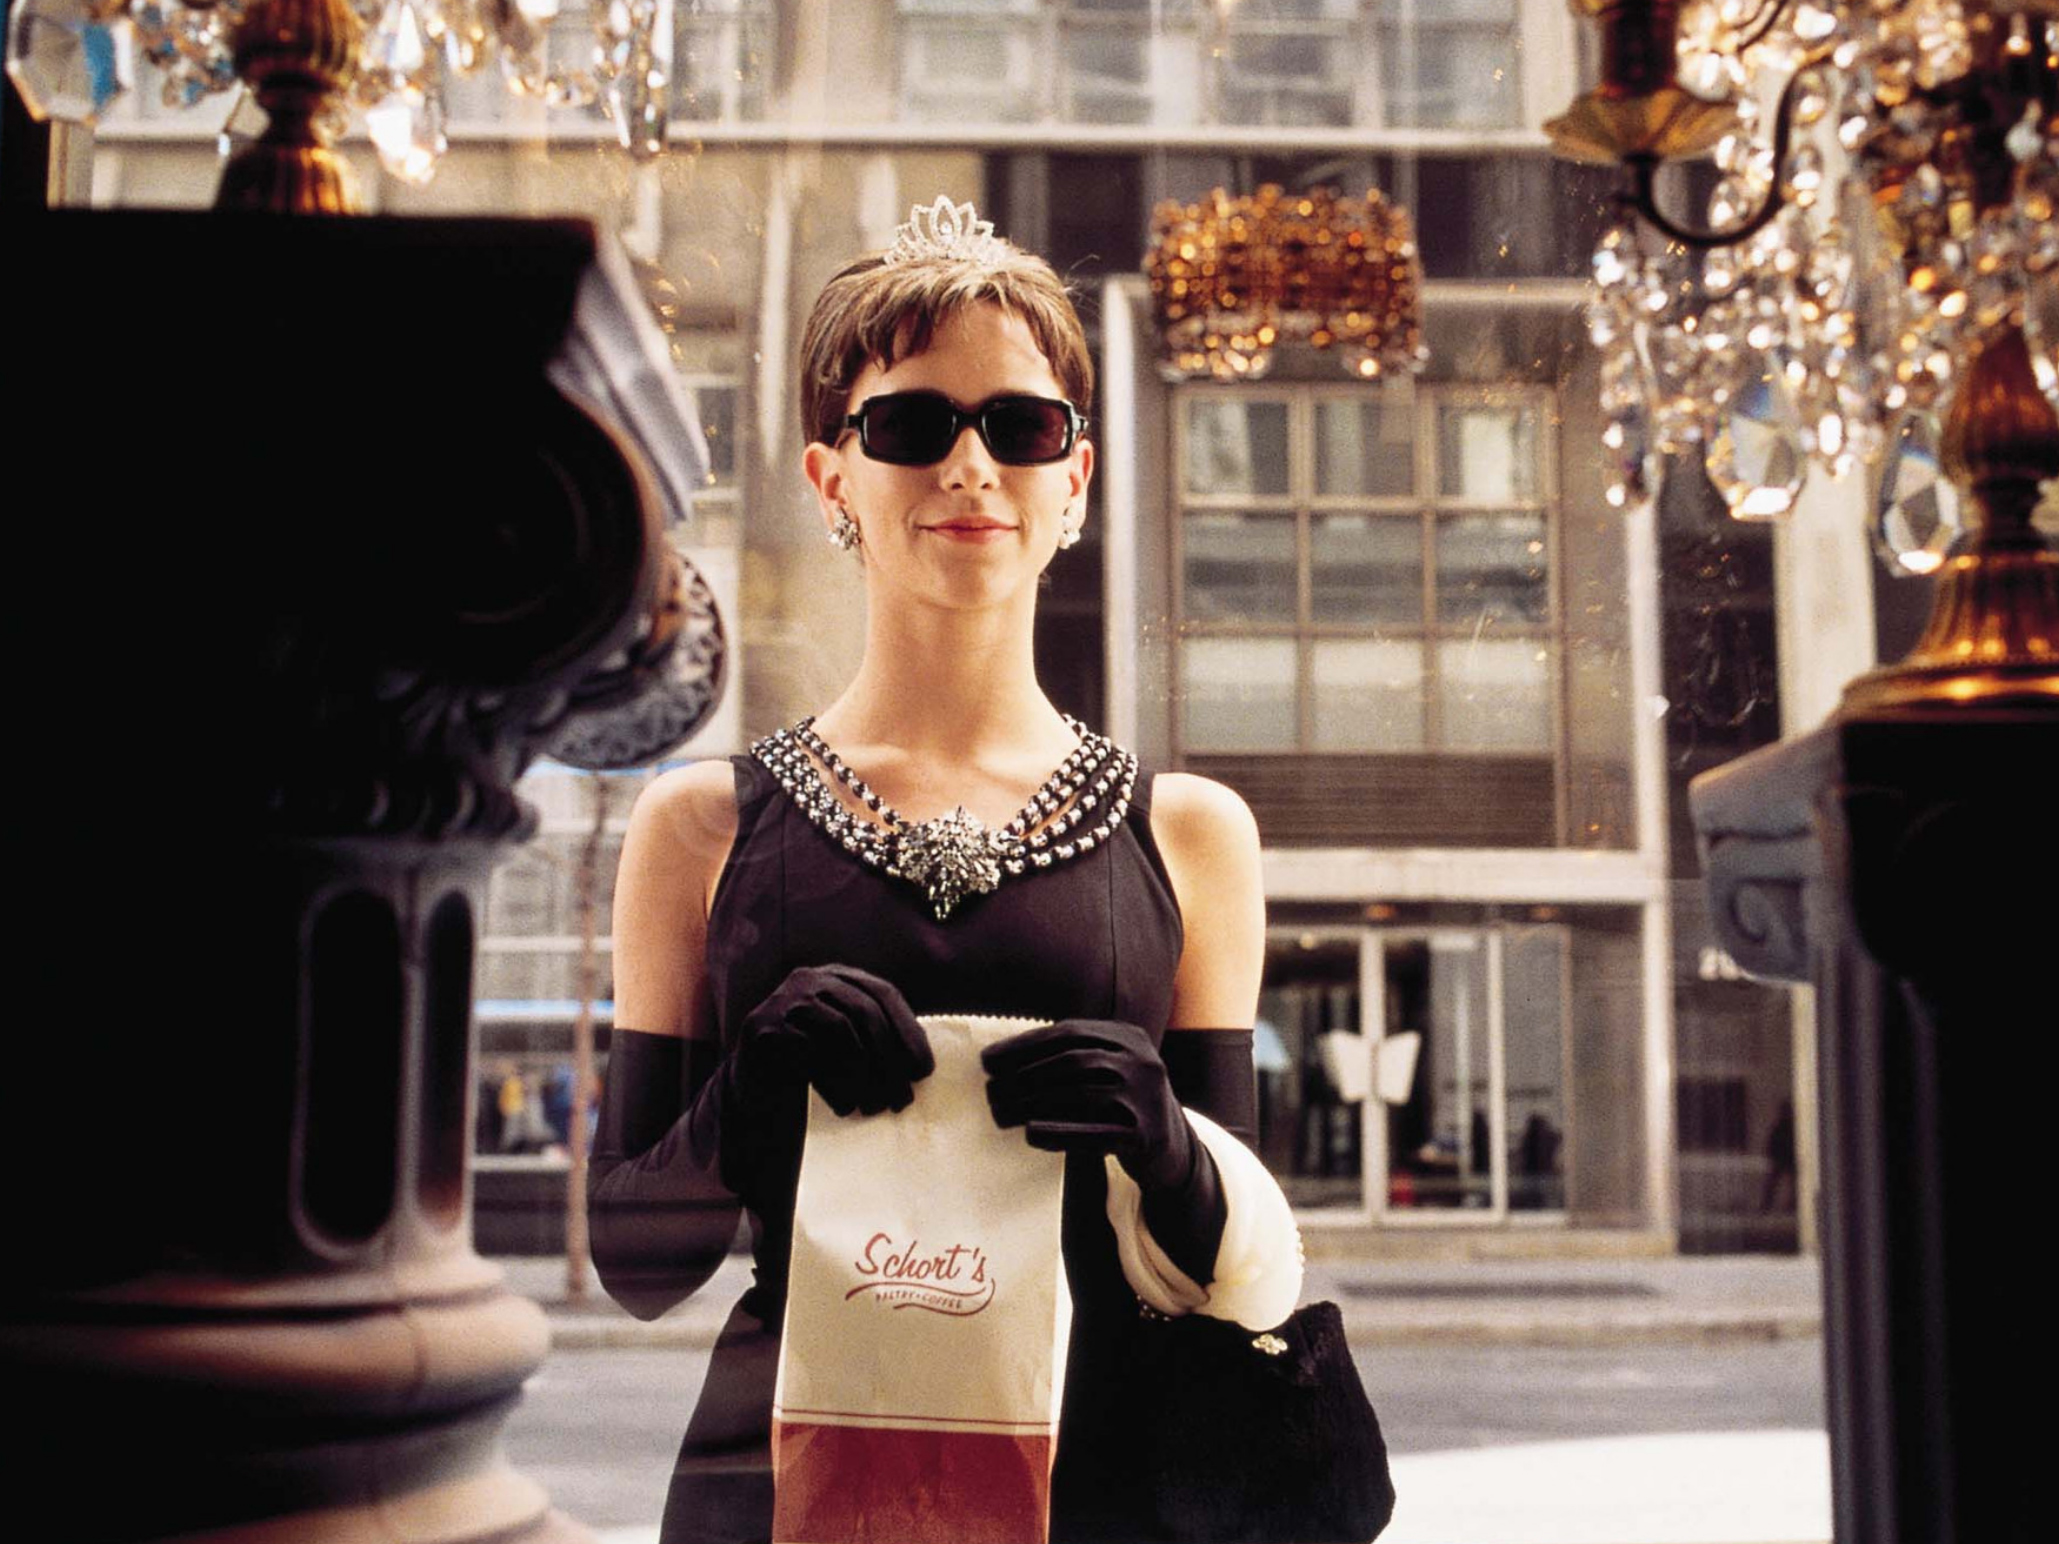 Jennifer Love Hewitt in “The Audrey Hepburn Story” (2000)